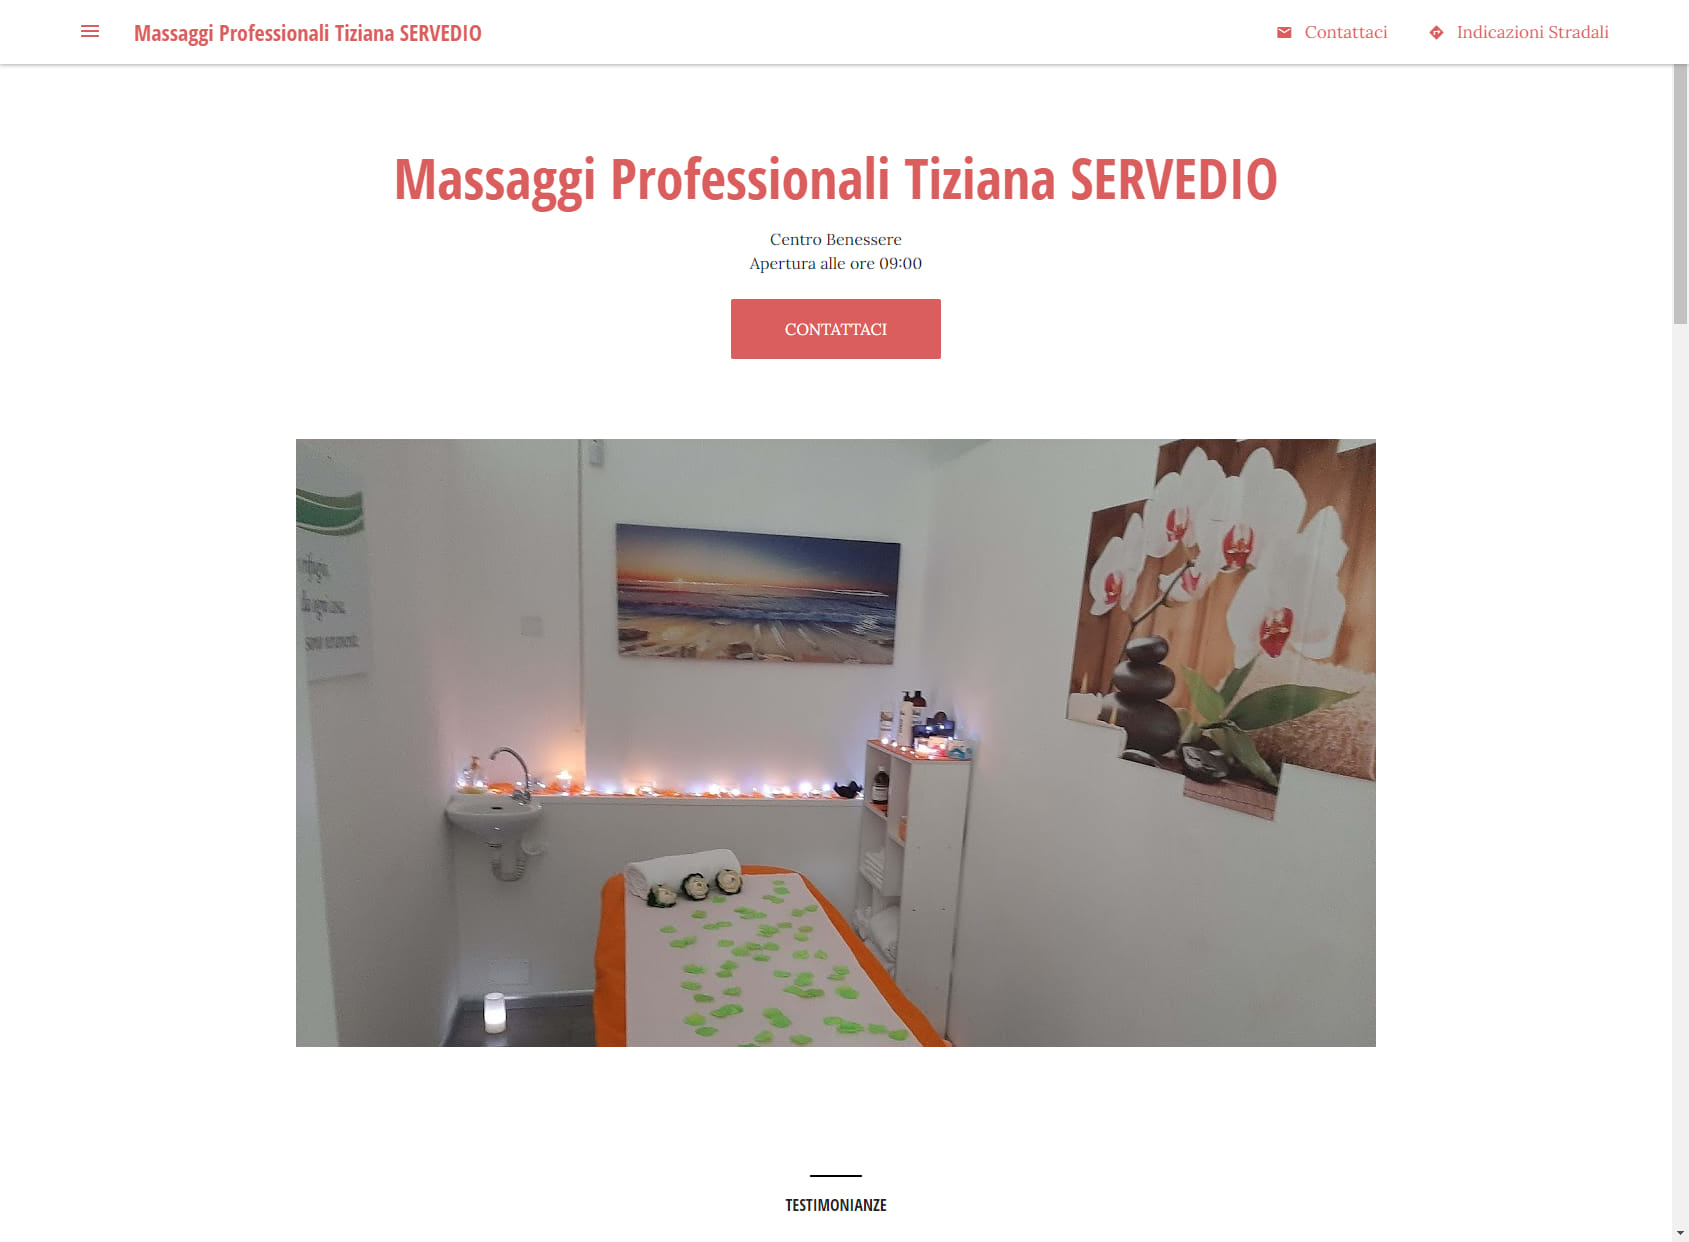 Massaggi Professionali Tiziana SERVEDIO